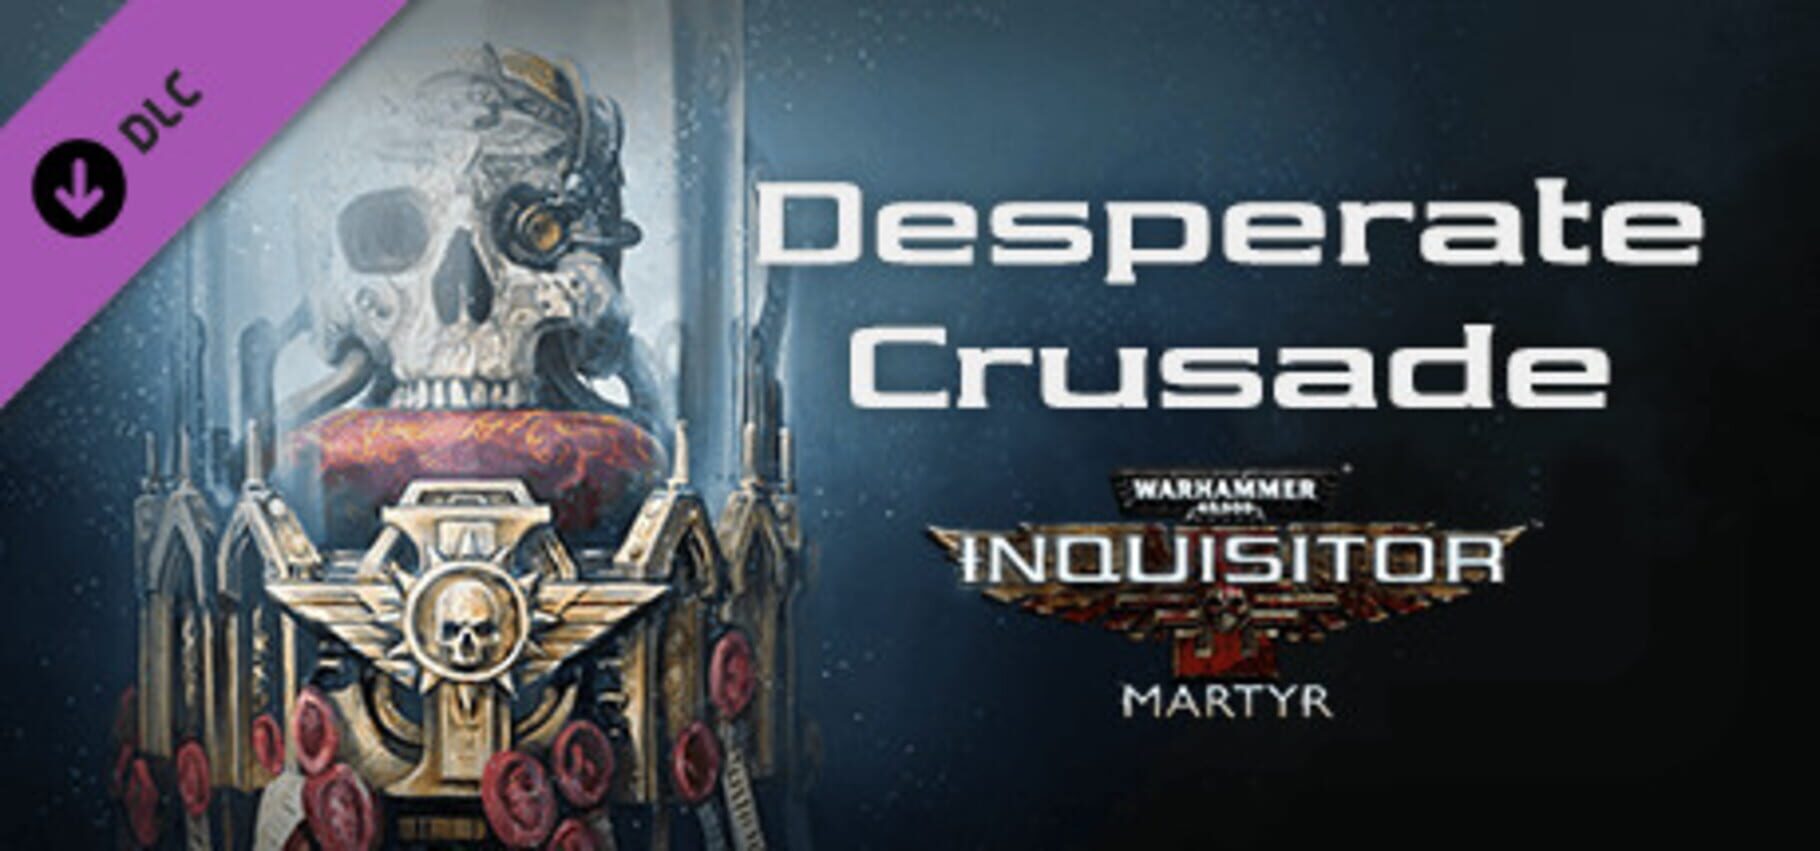 Warhammer 40,000: Inquisitor - Martyr: Desperate Crusade